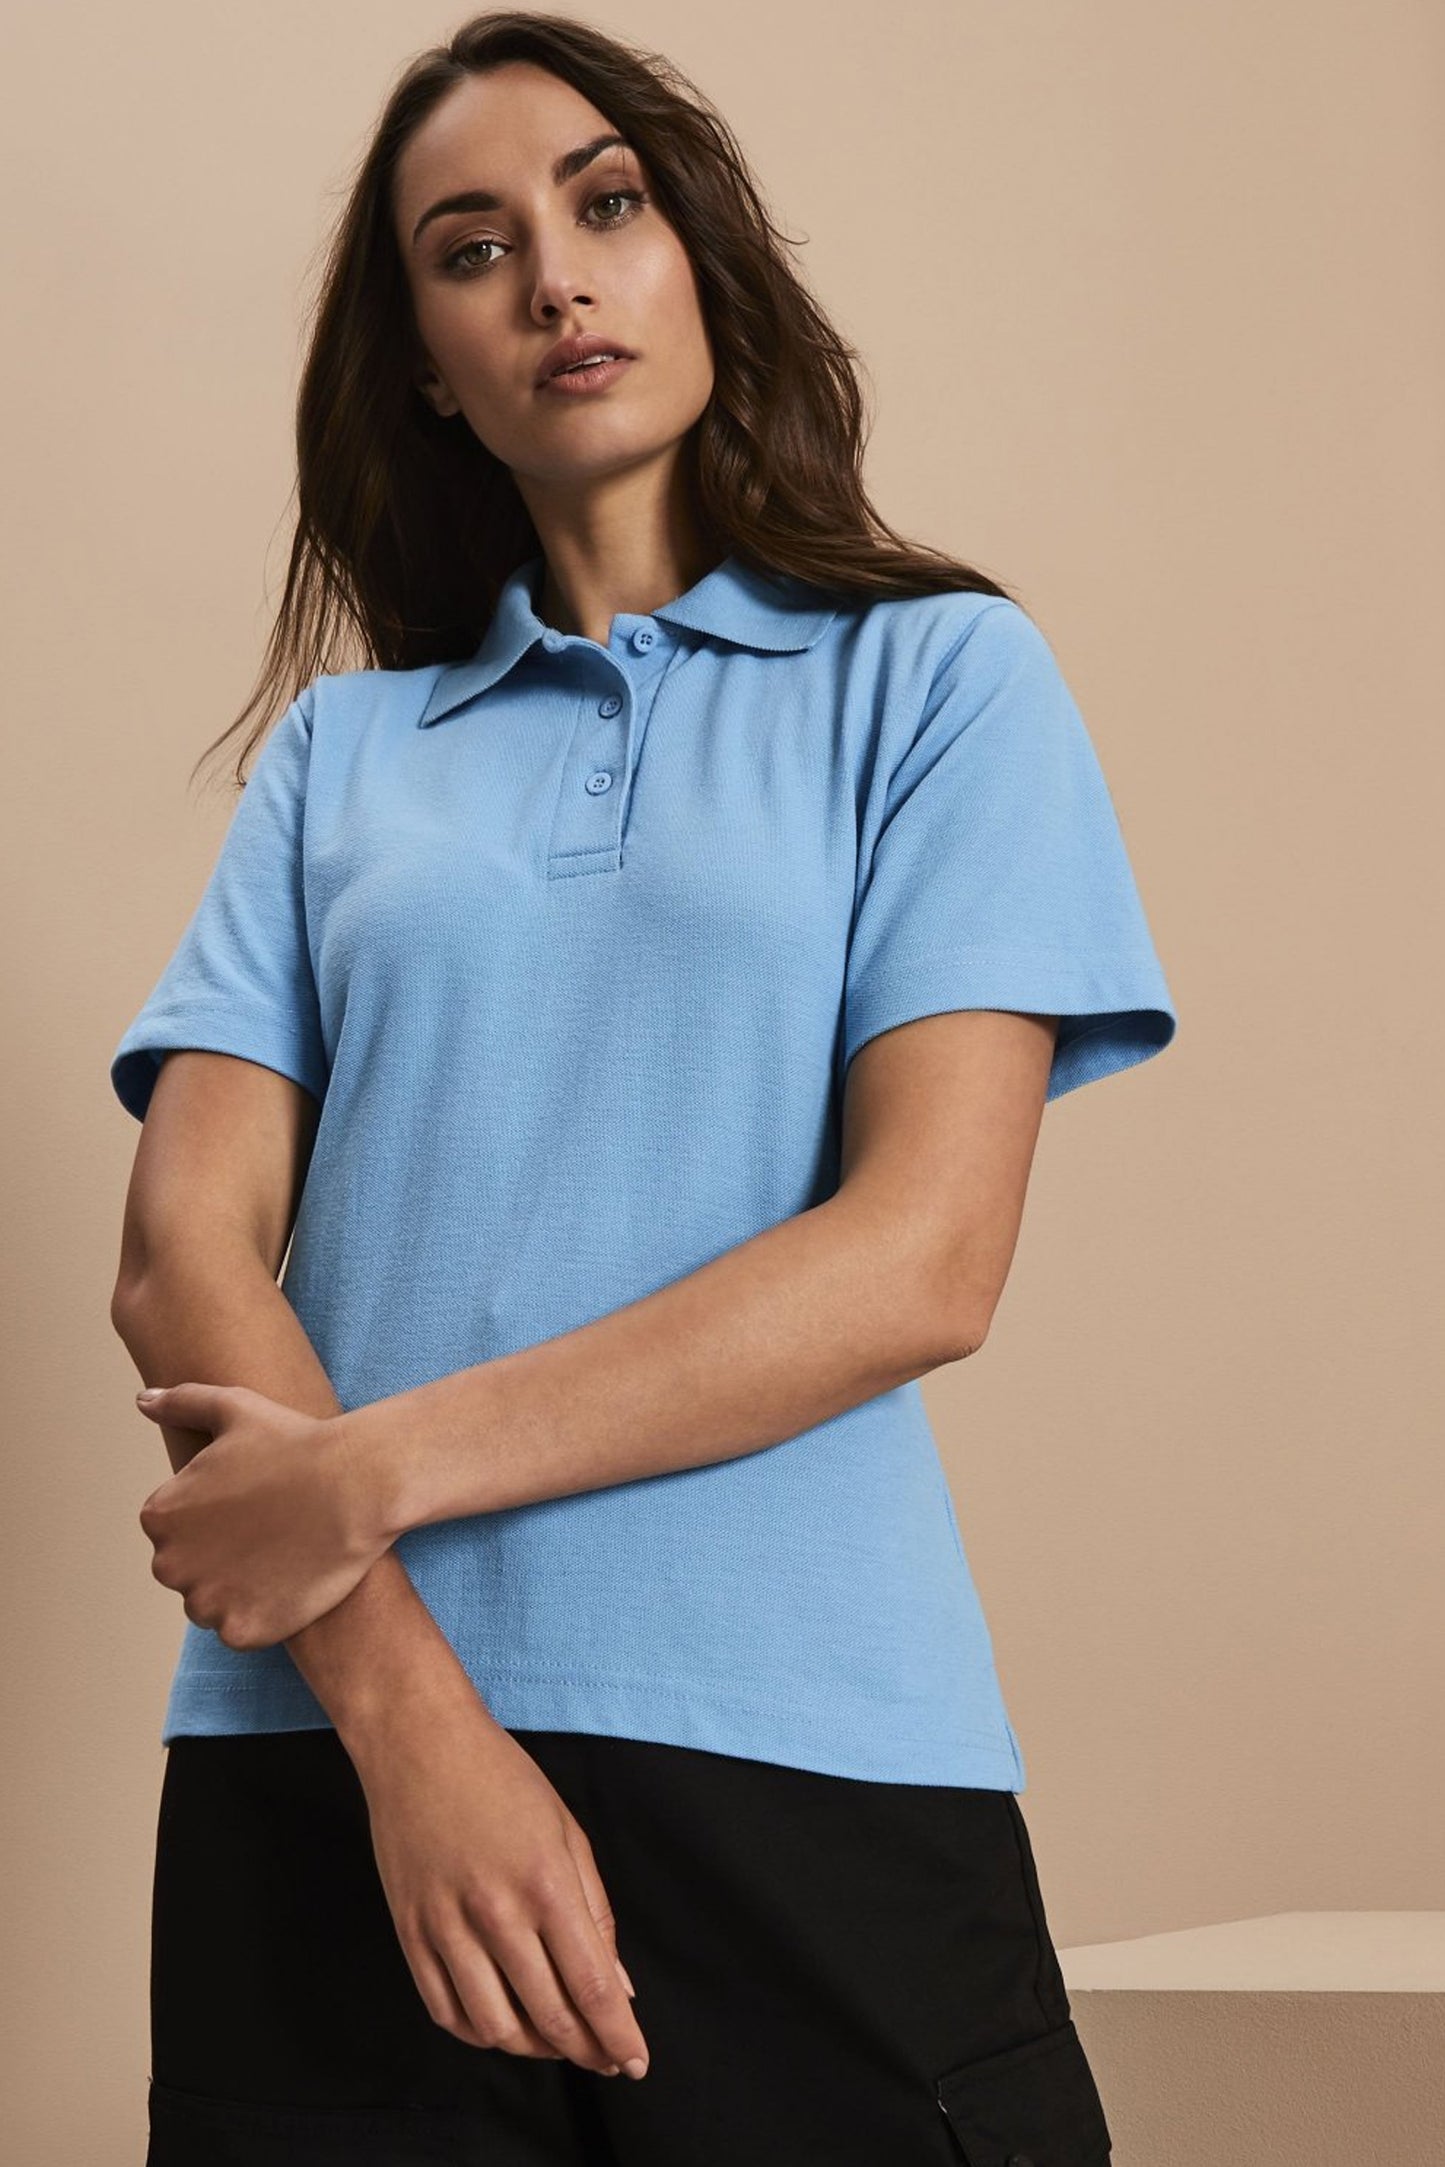 Women's Sky Blue Polo Shirt